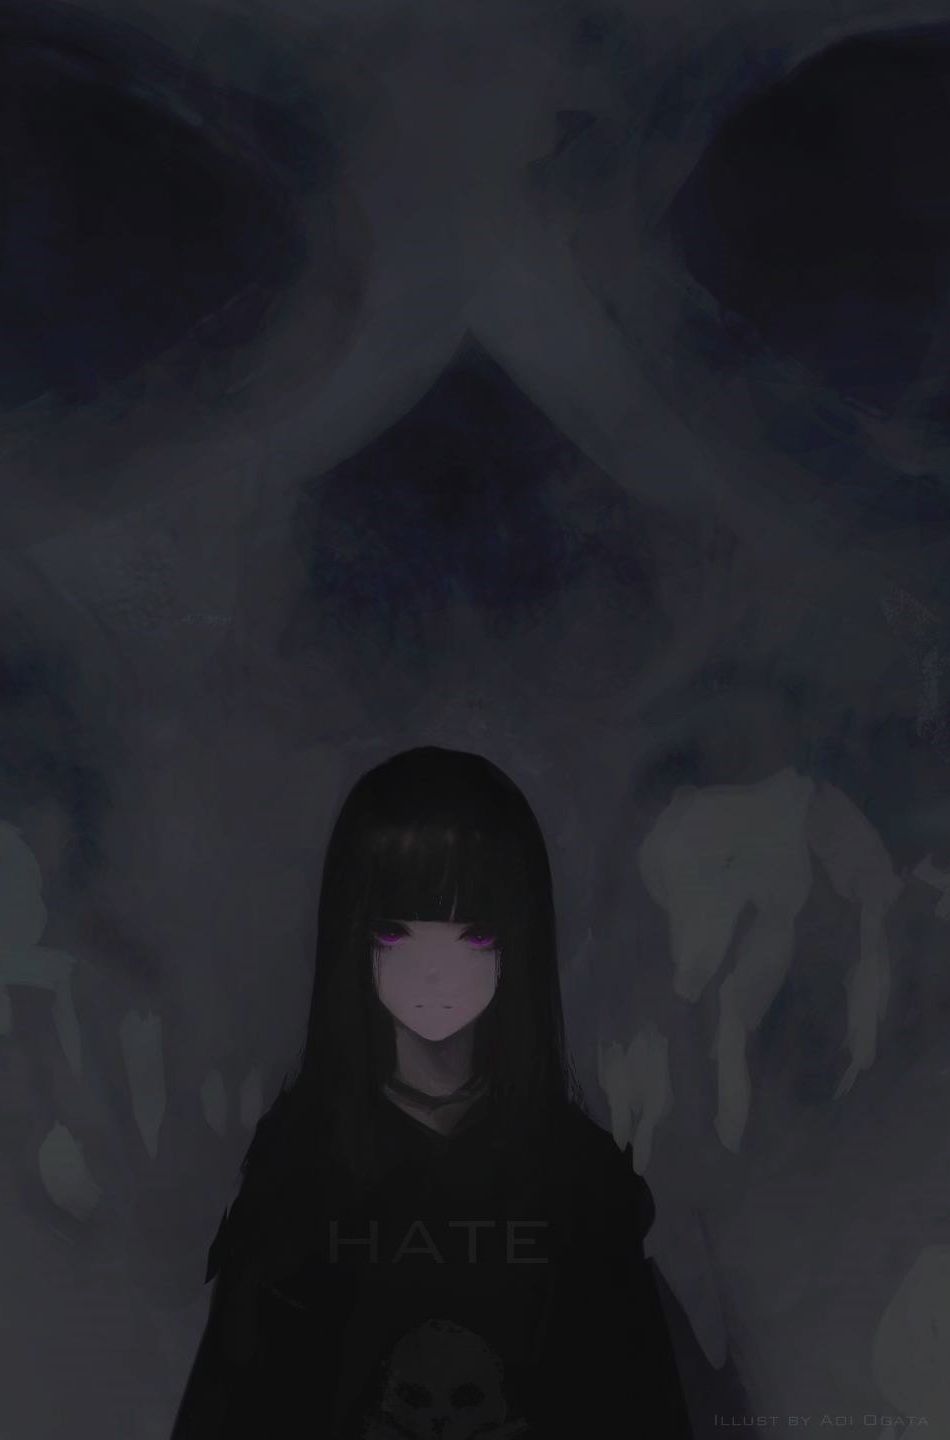 Download wallpaper 950x1534 anime girl, purple eyes, dark, skull, iphone, 950x1534 HD background, 2429